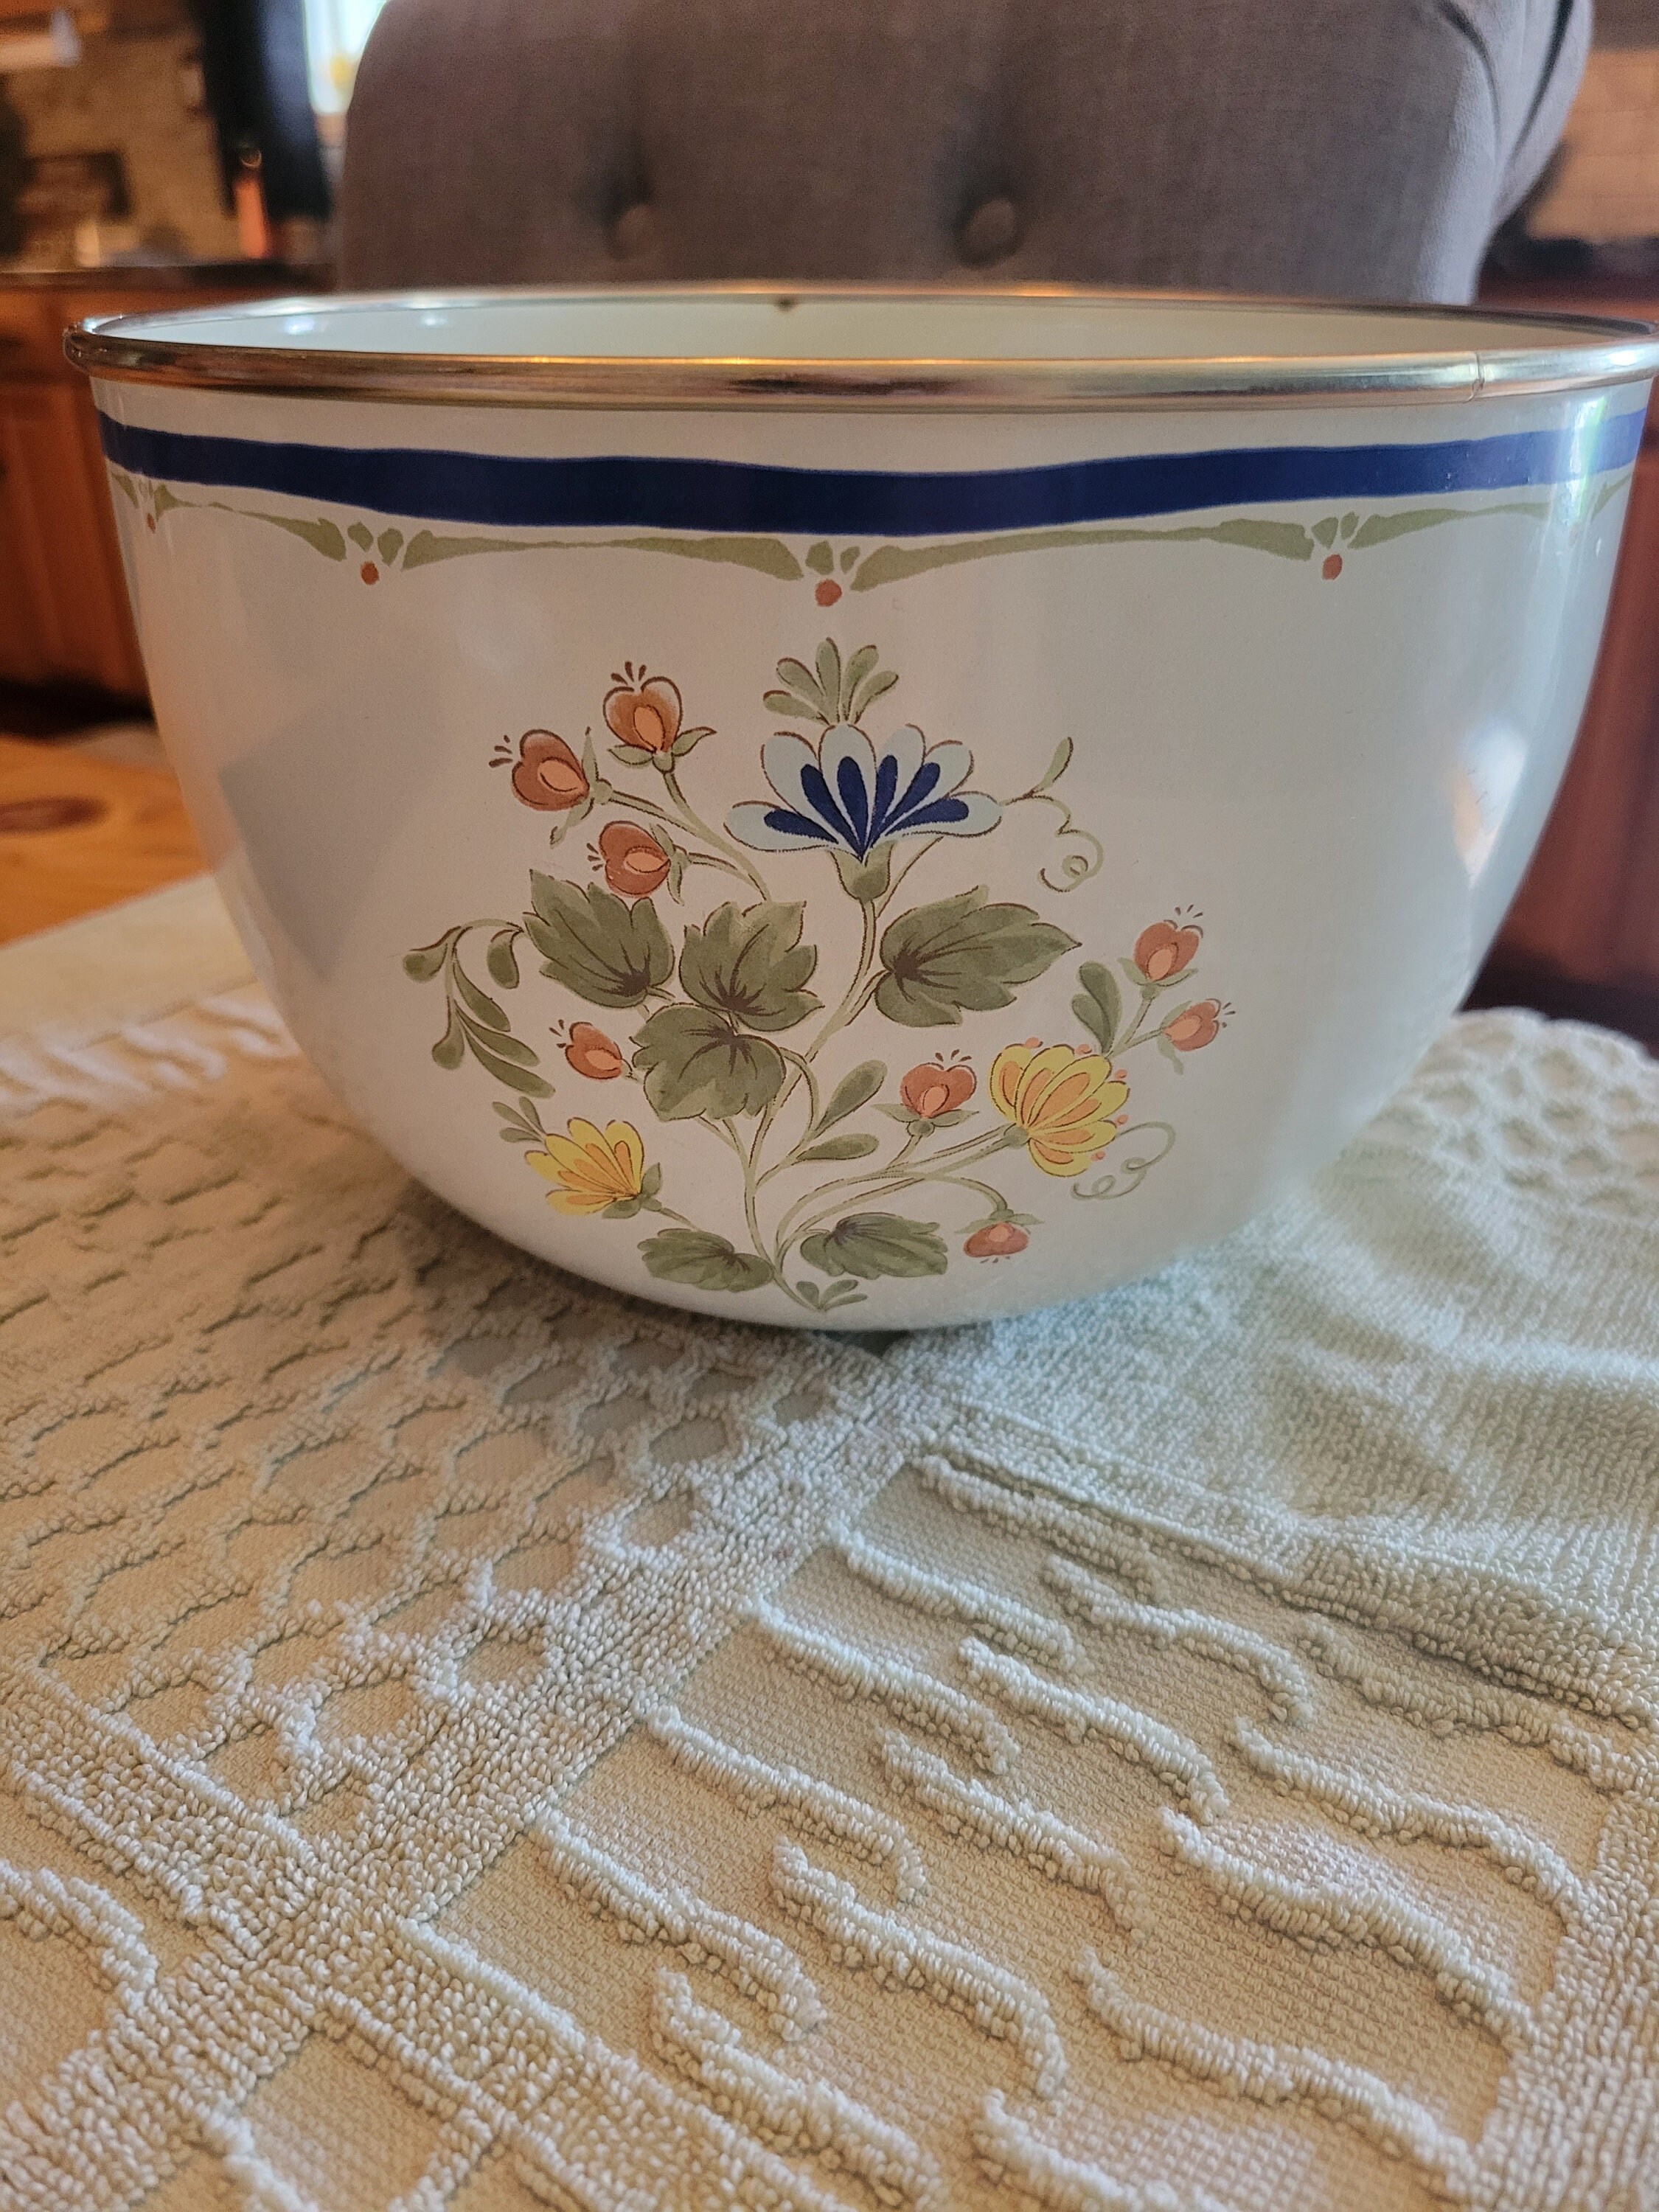 Vintage Kobe Porcelain Enamelware Mixing Bowl & Small Bowl with